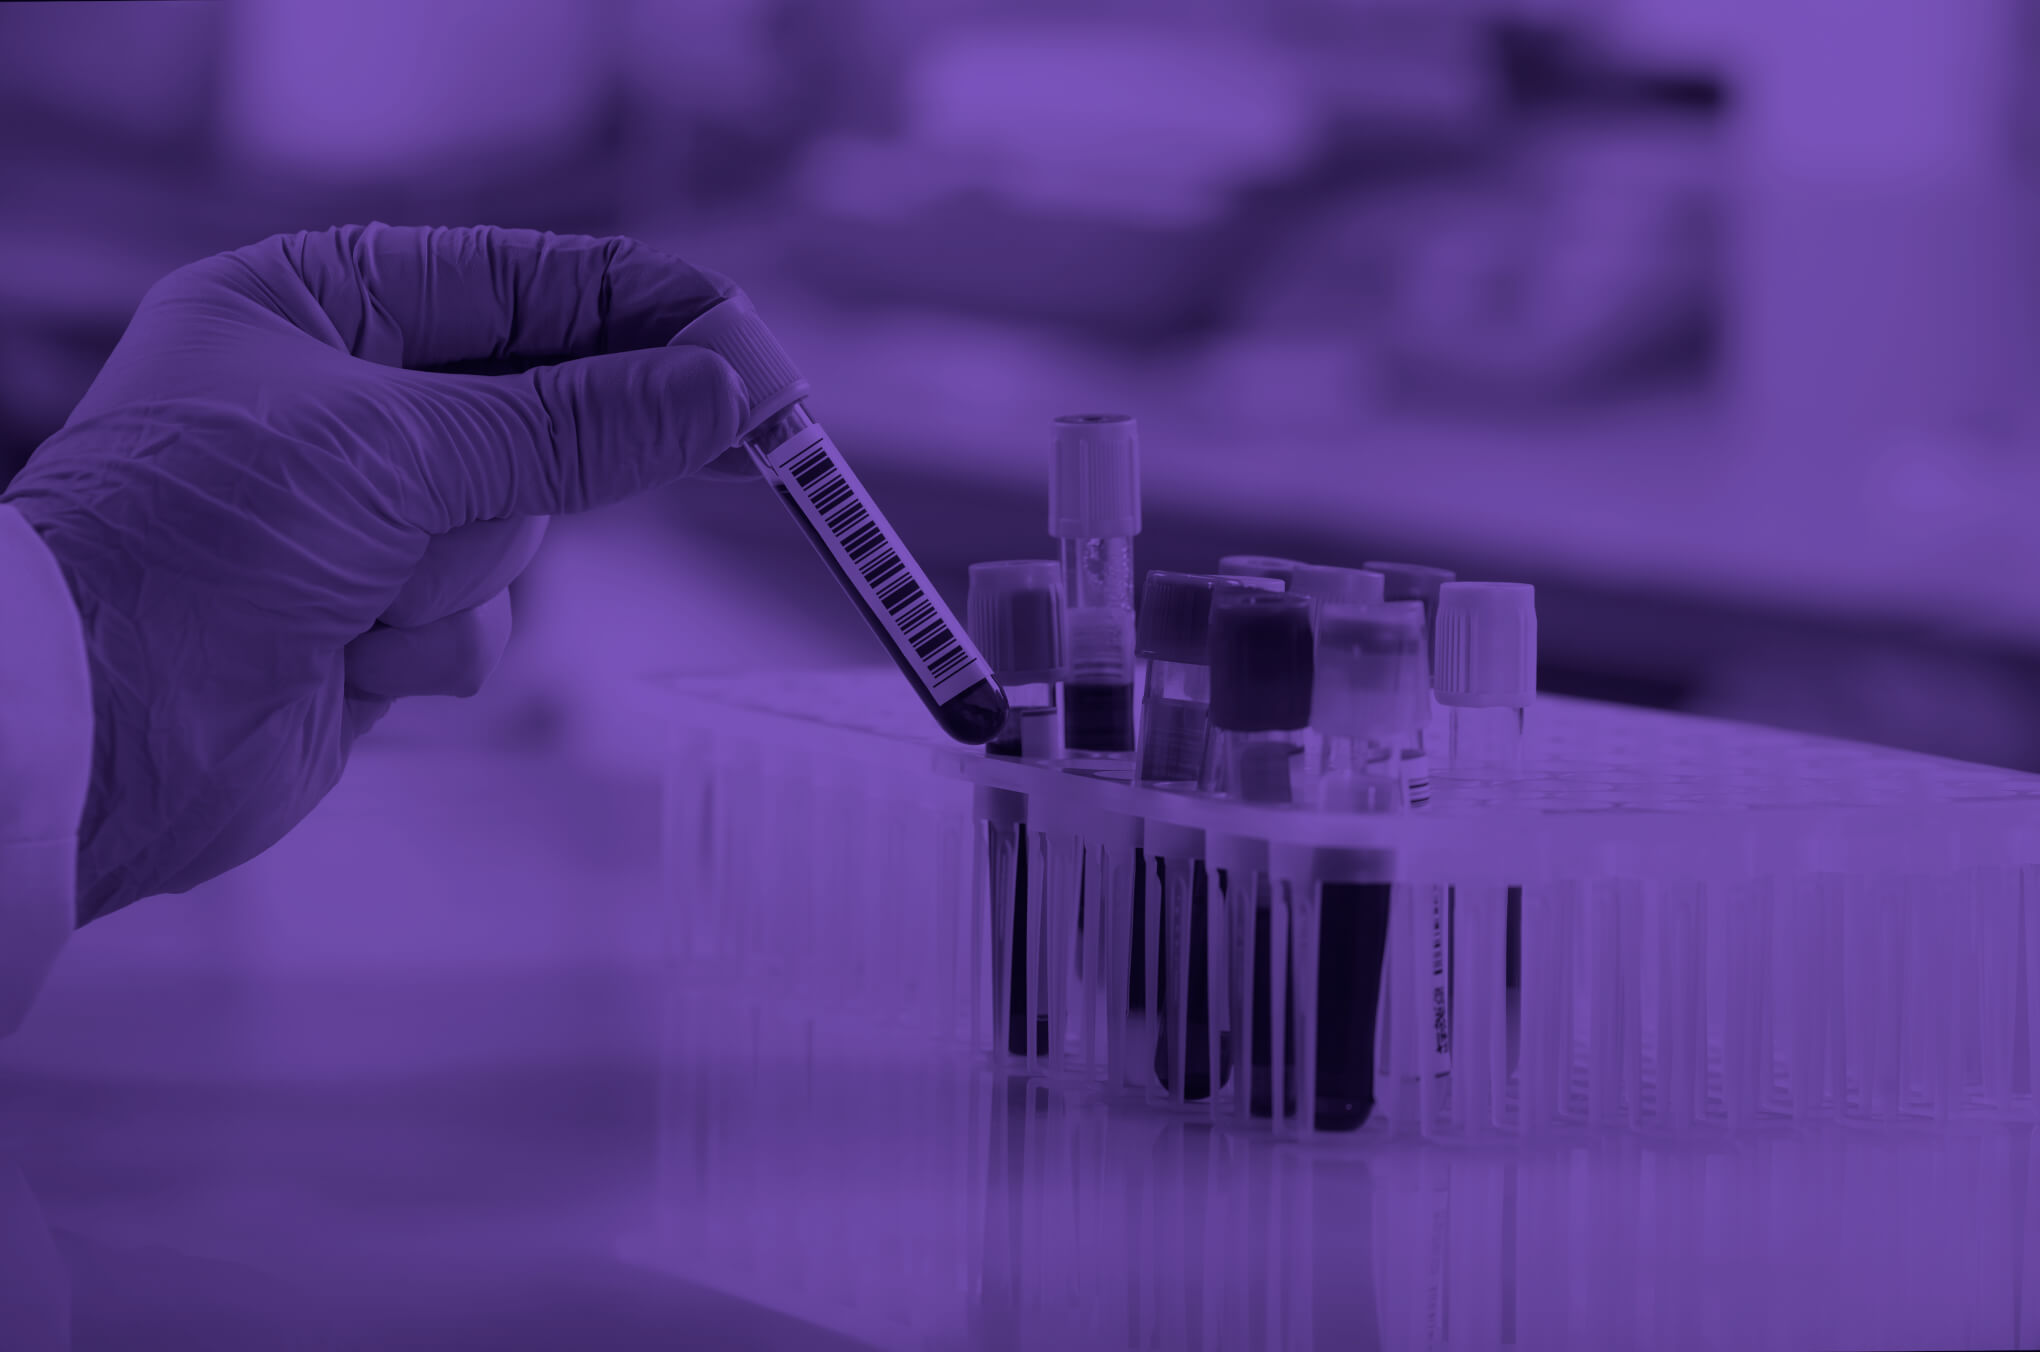 Background image of lab-based medical testing